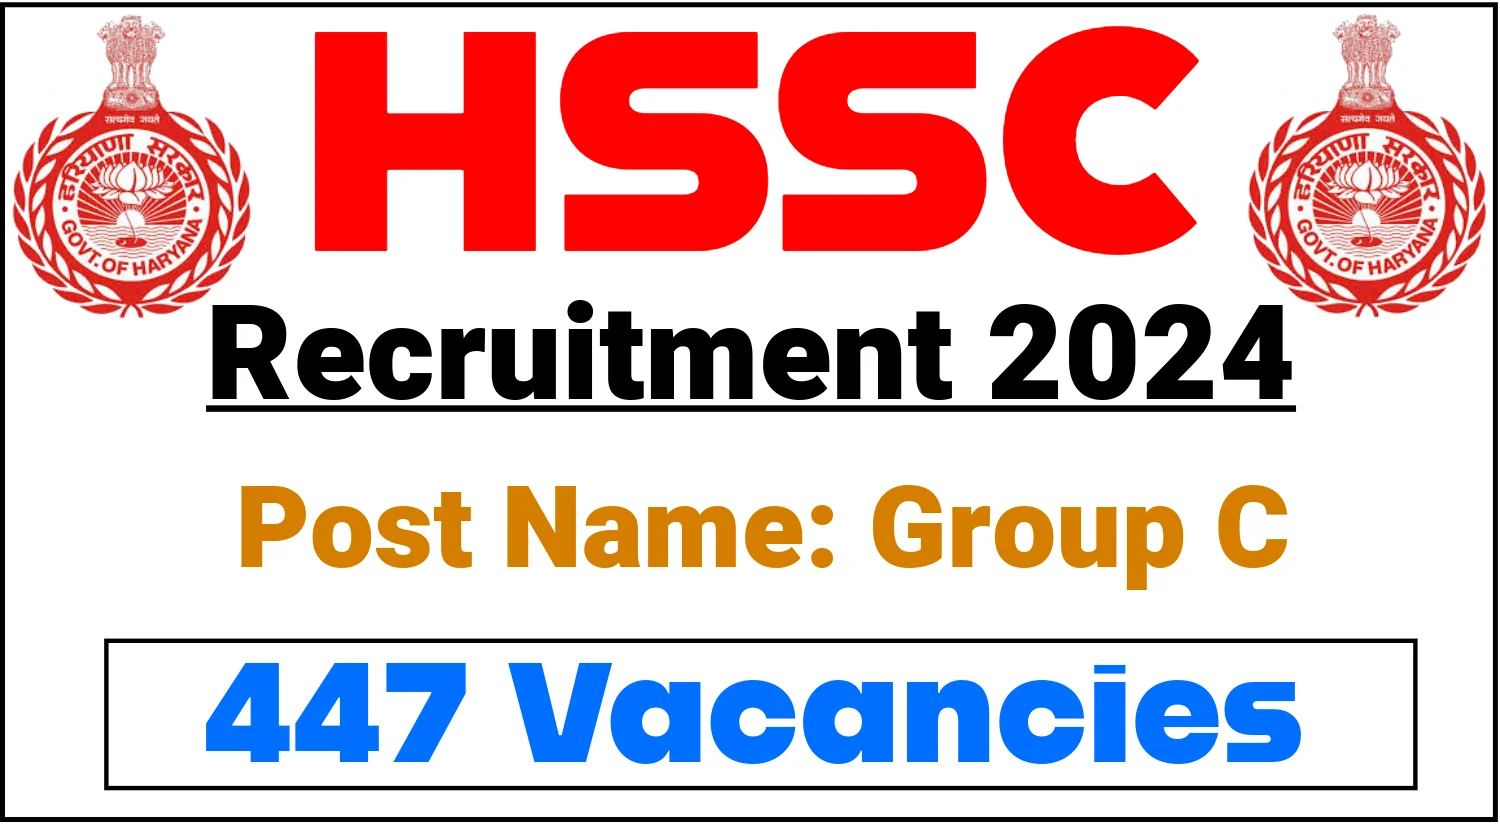 HSSC Group C Recruitment 2024 Notification for 447 Vacancie